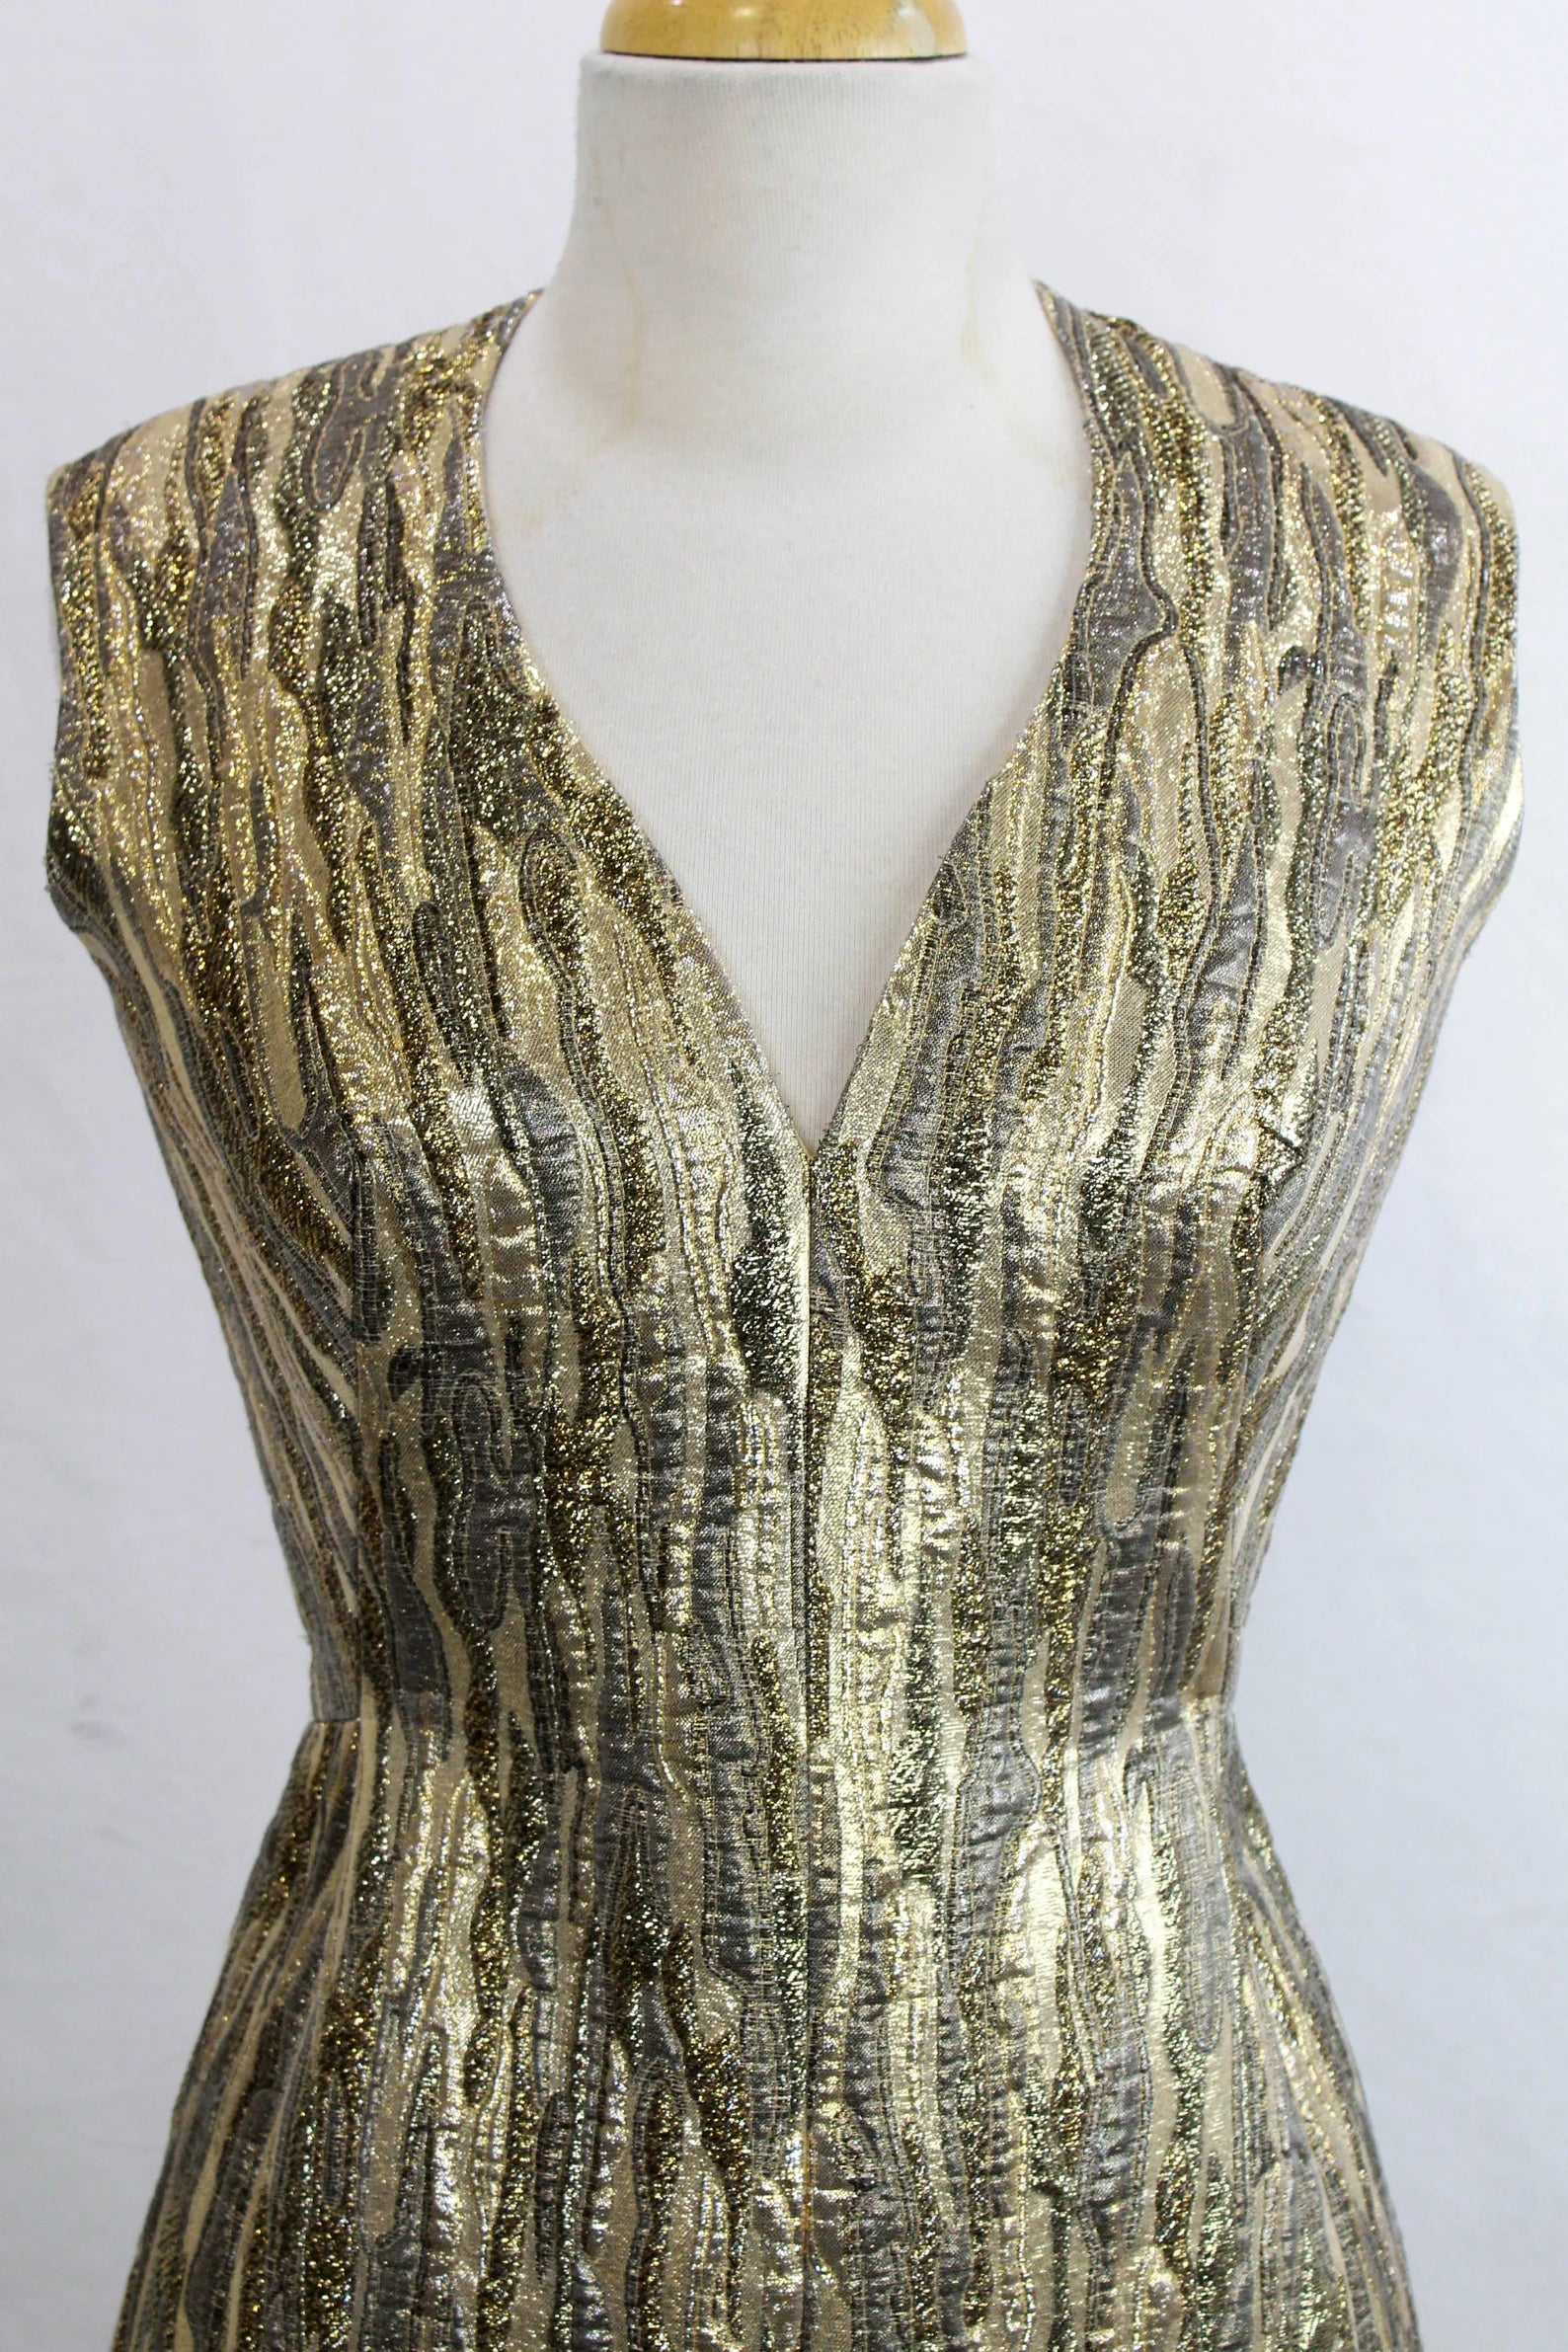 1960s Pauline Trigere Metallic Gold Lame Cocktail Dress, Vintage Cocktail Dress & Matching Coat, V Neck Sleeveless Dress Suit, B34, W28